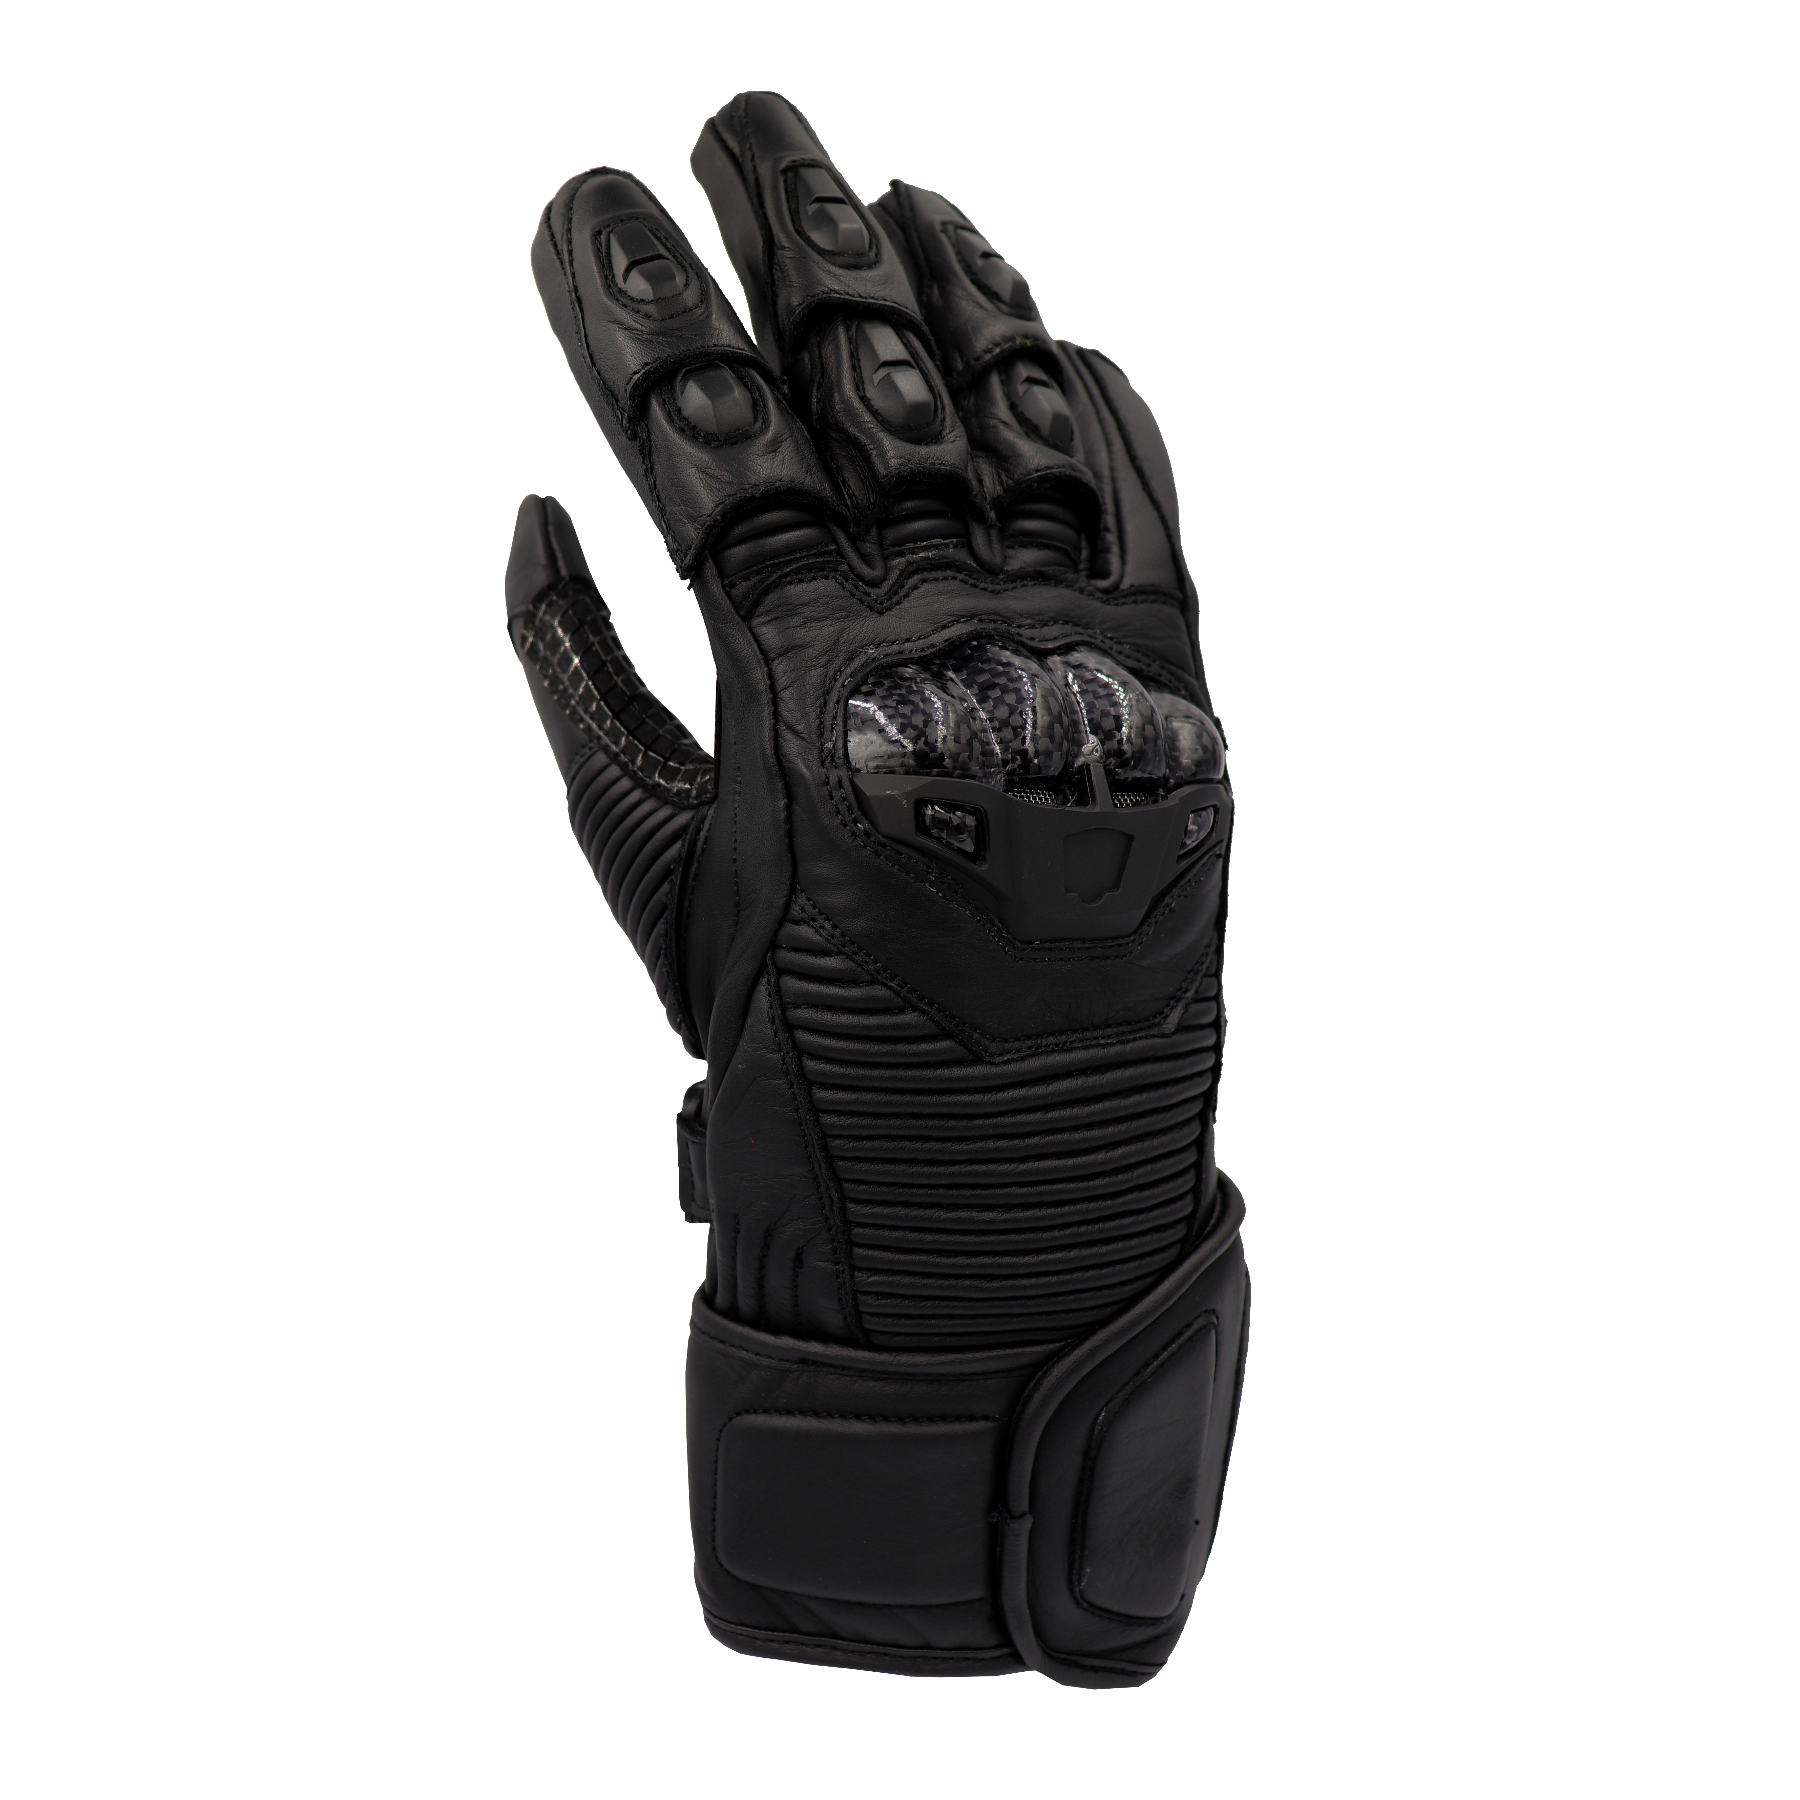 DARK STORM - Black Long Cuff Gauntlet Leather Motorcycle Glove by RAVEN Moto